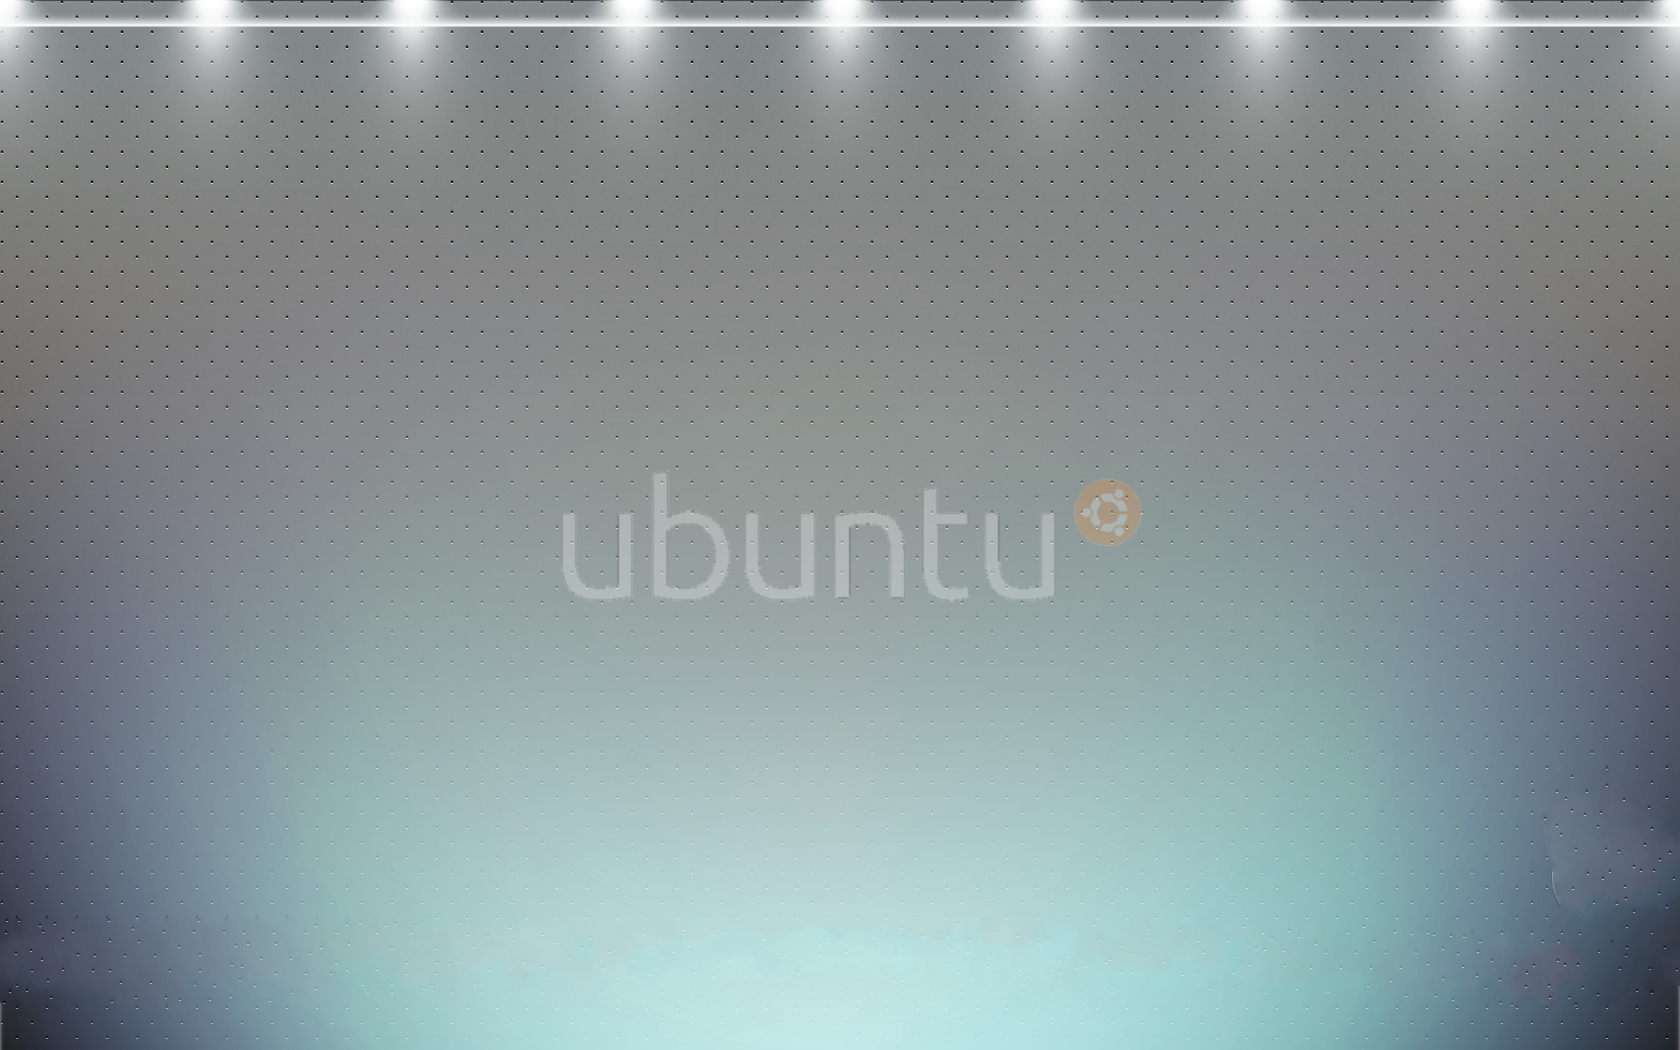 Ubuntu 10.04 Light Wallpaper